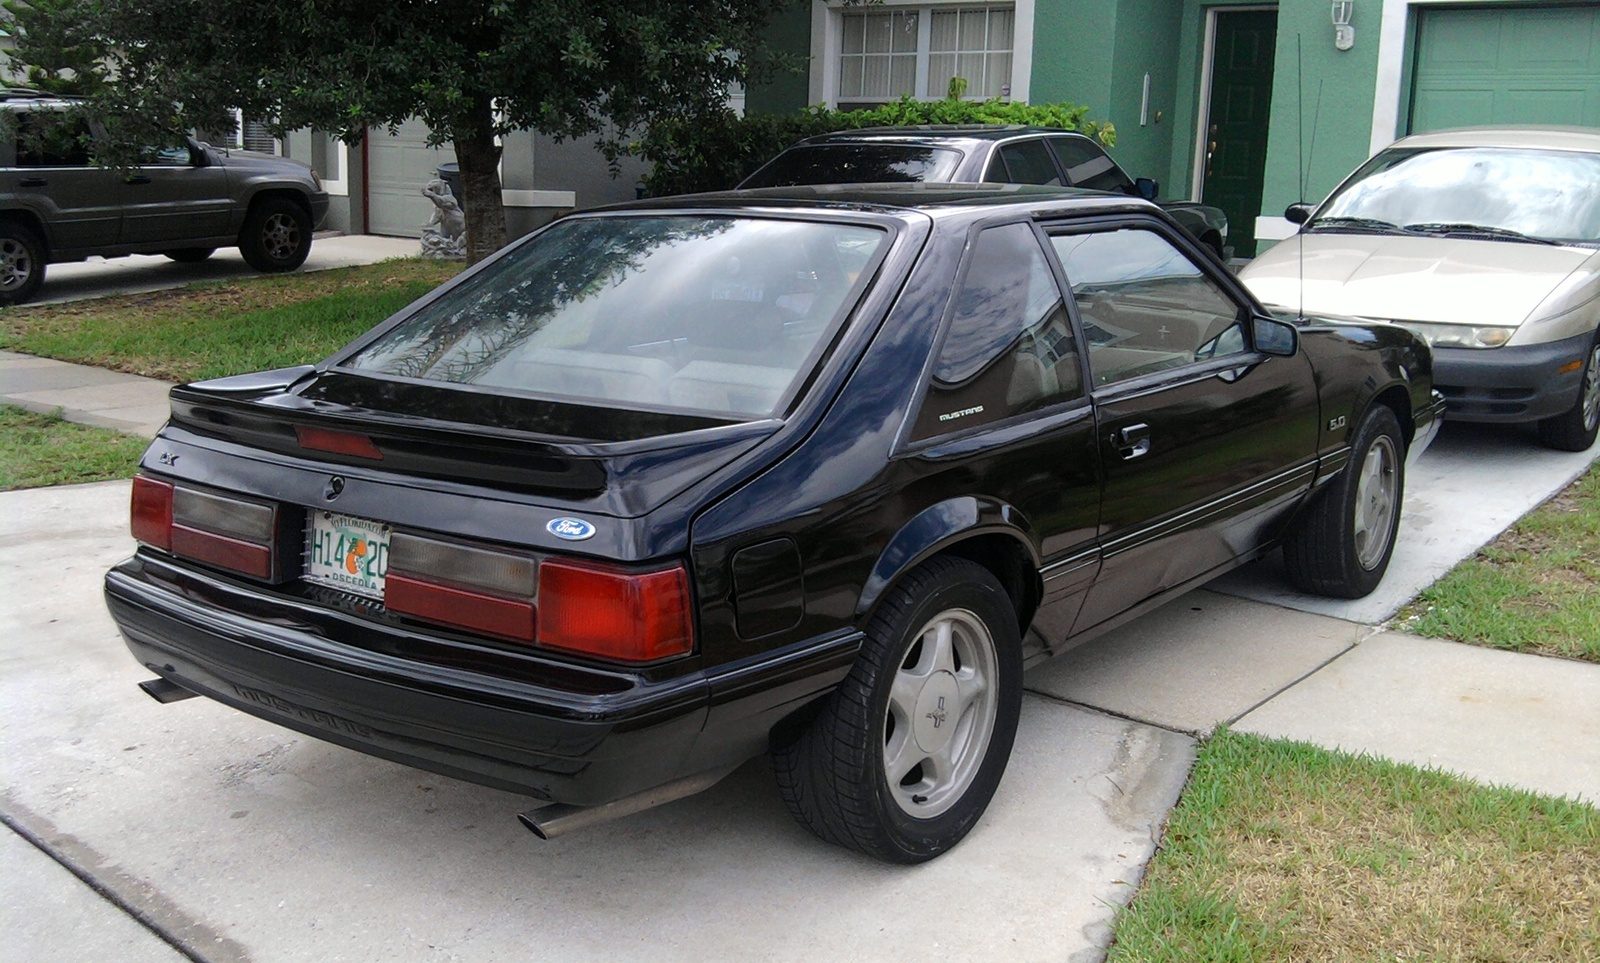 1991-ford-mustang-2-dr-lx-5.0-hatchback-pic-46576.jpeg